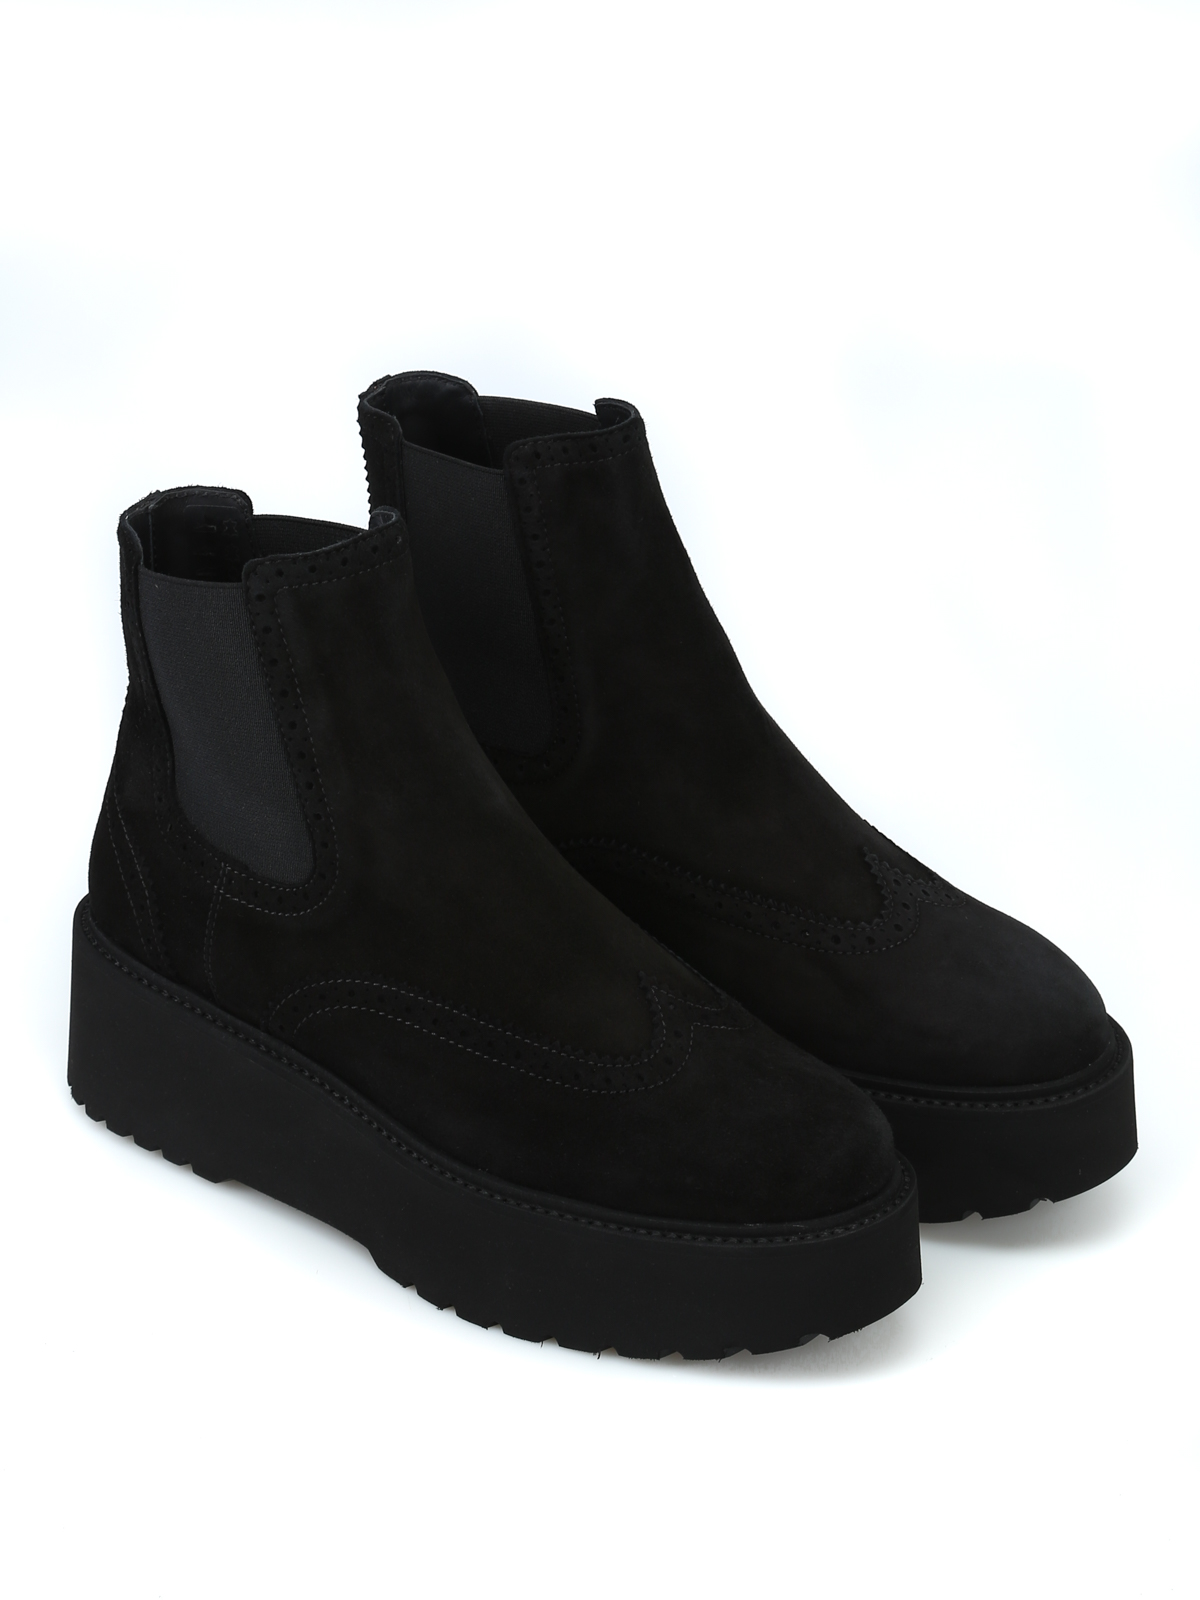 urban chelsea boots